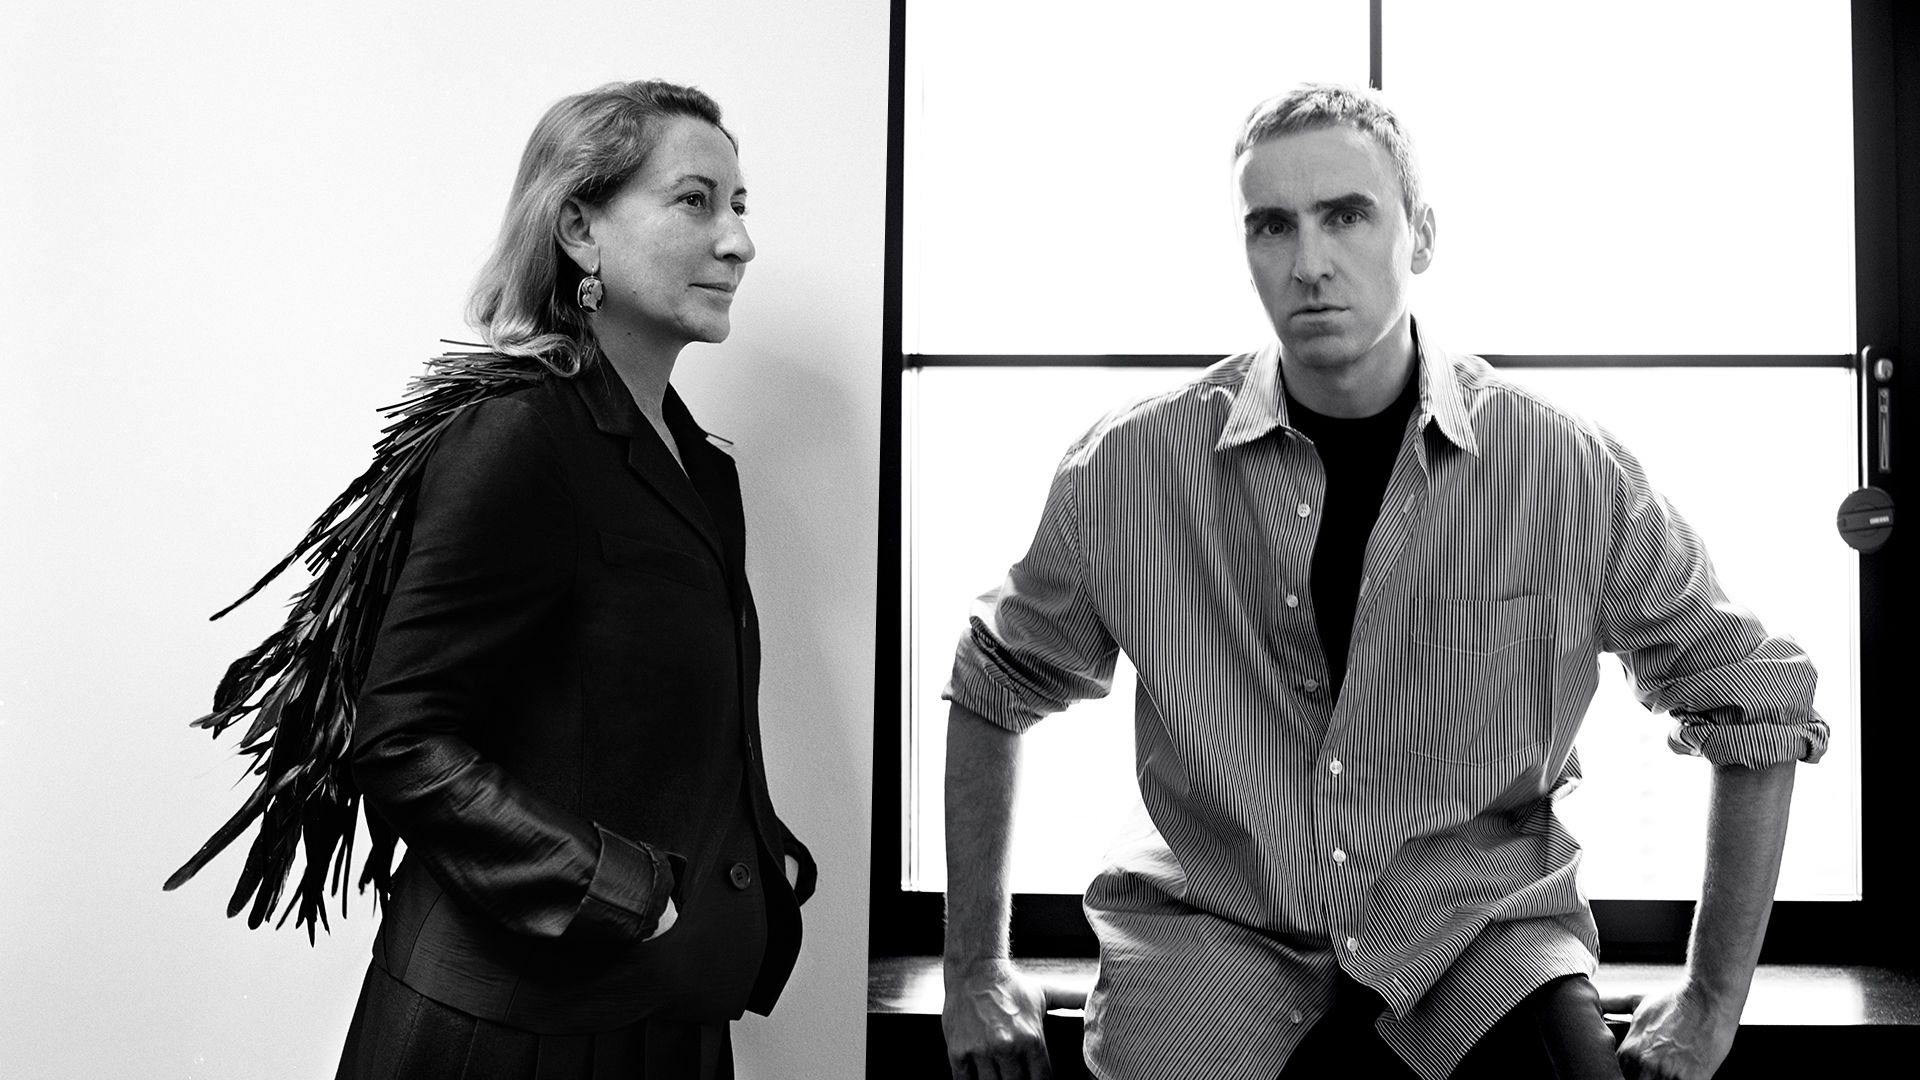 Raf Simons Joins Prada as Co-Creative Director Alongside Miuccia Prada